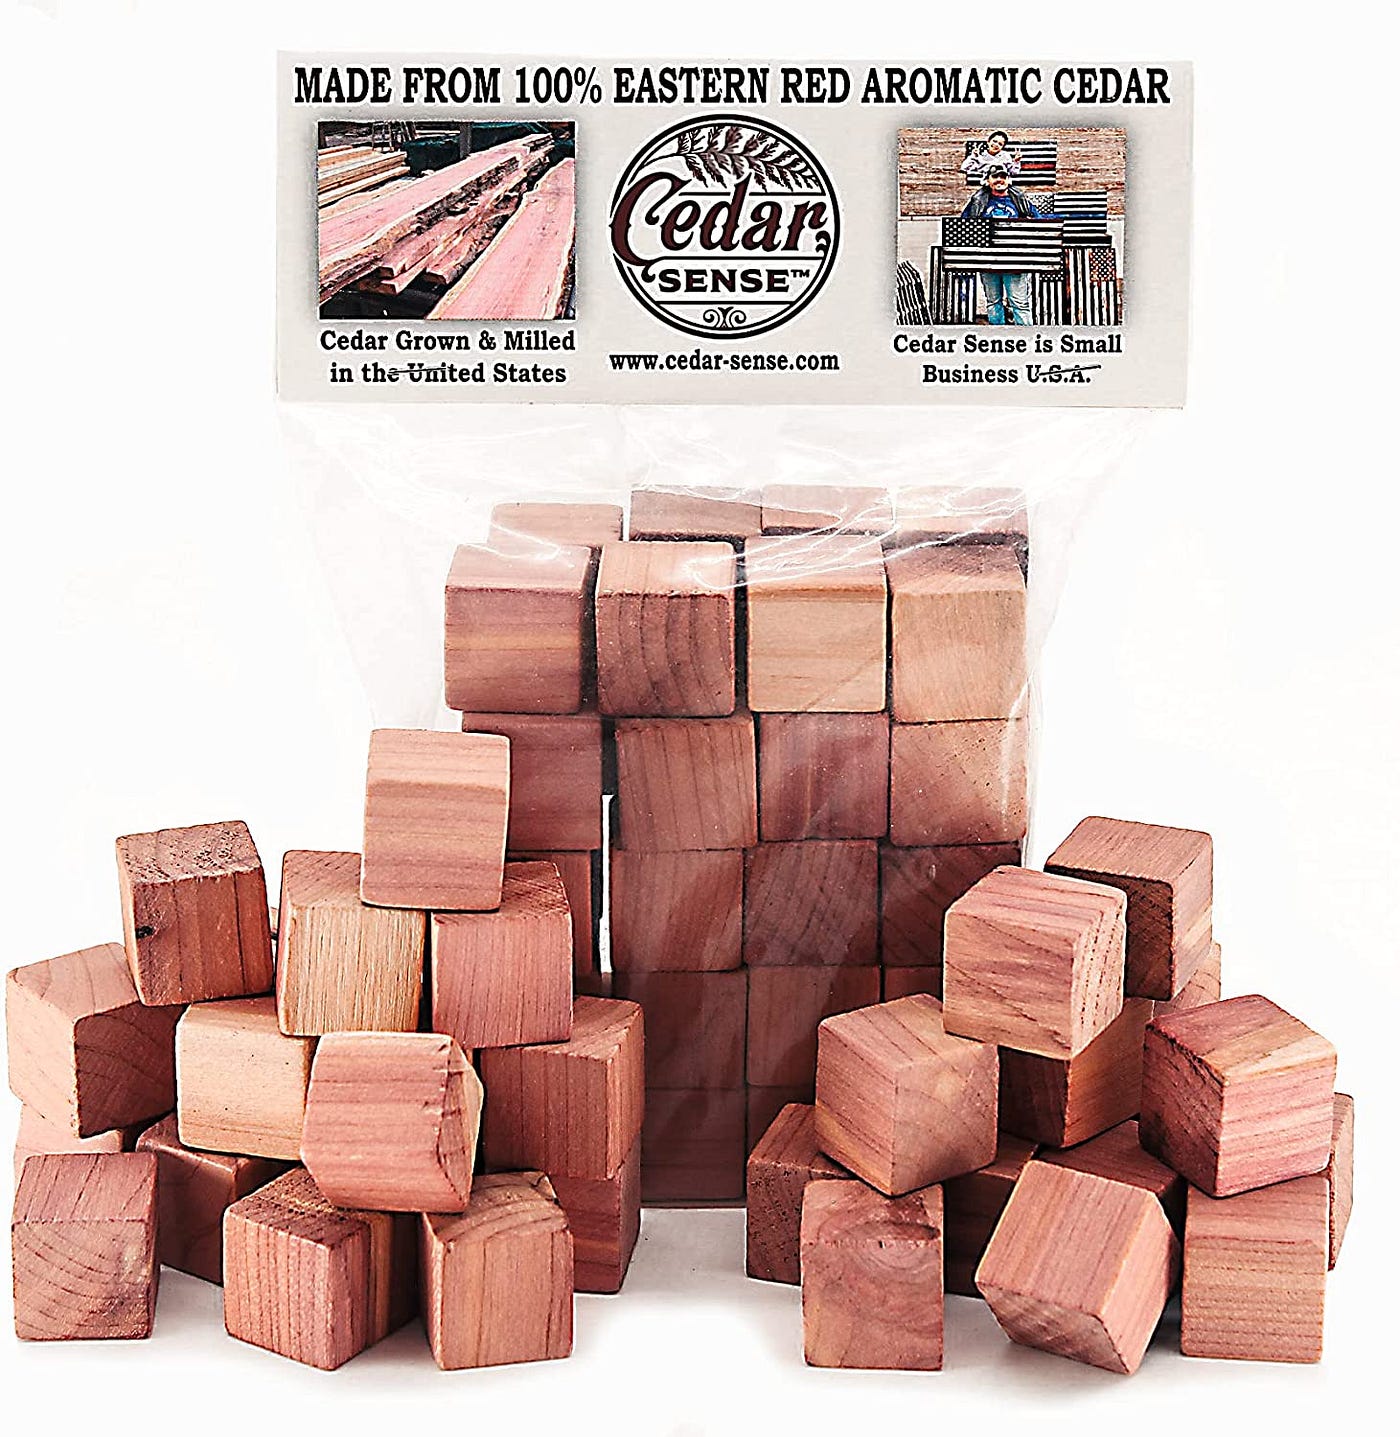 The Timeless Elegance of Cedar: A Closer Look at Cedar Blocks